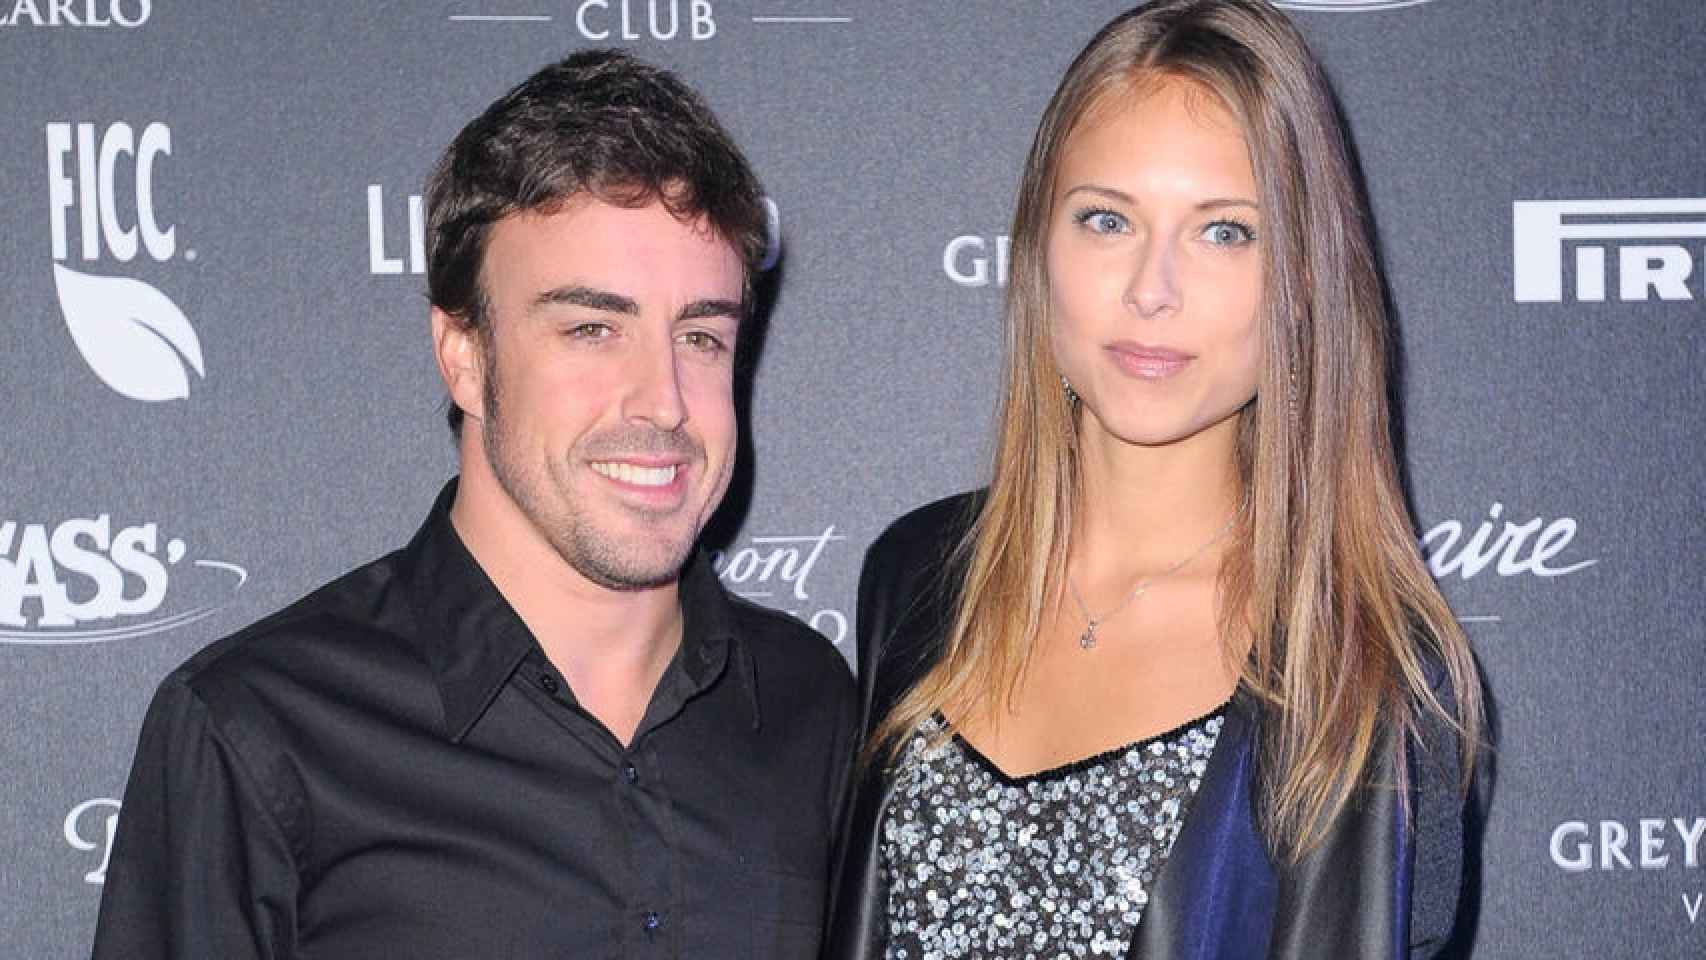 Mujer Fernando Alonso (Ferrari)